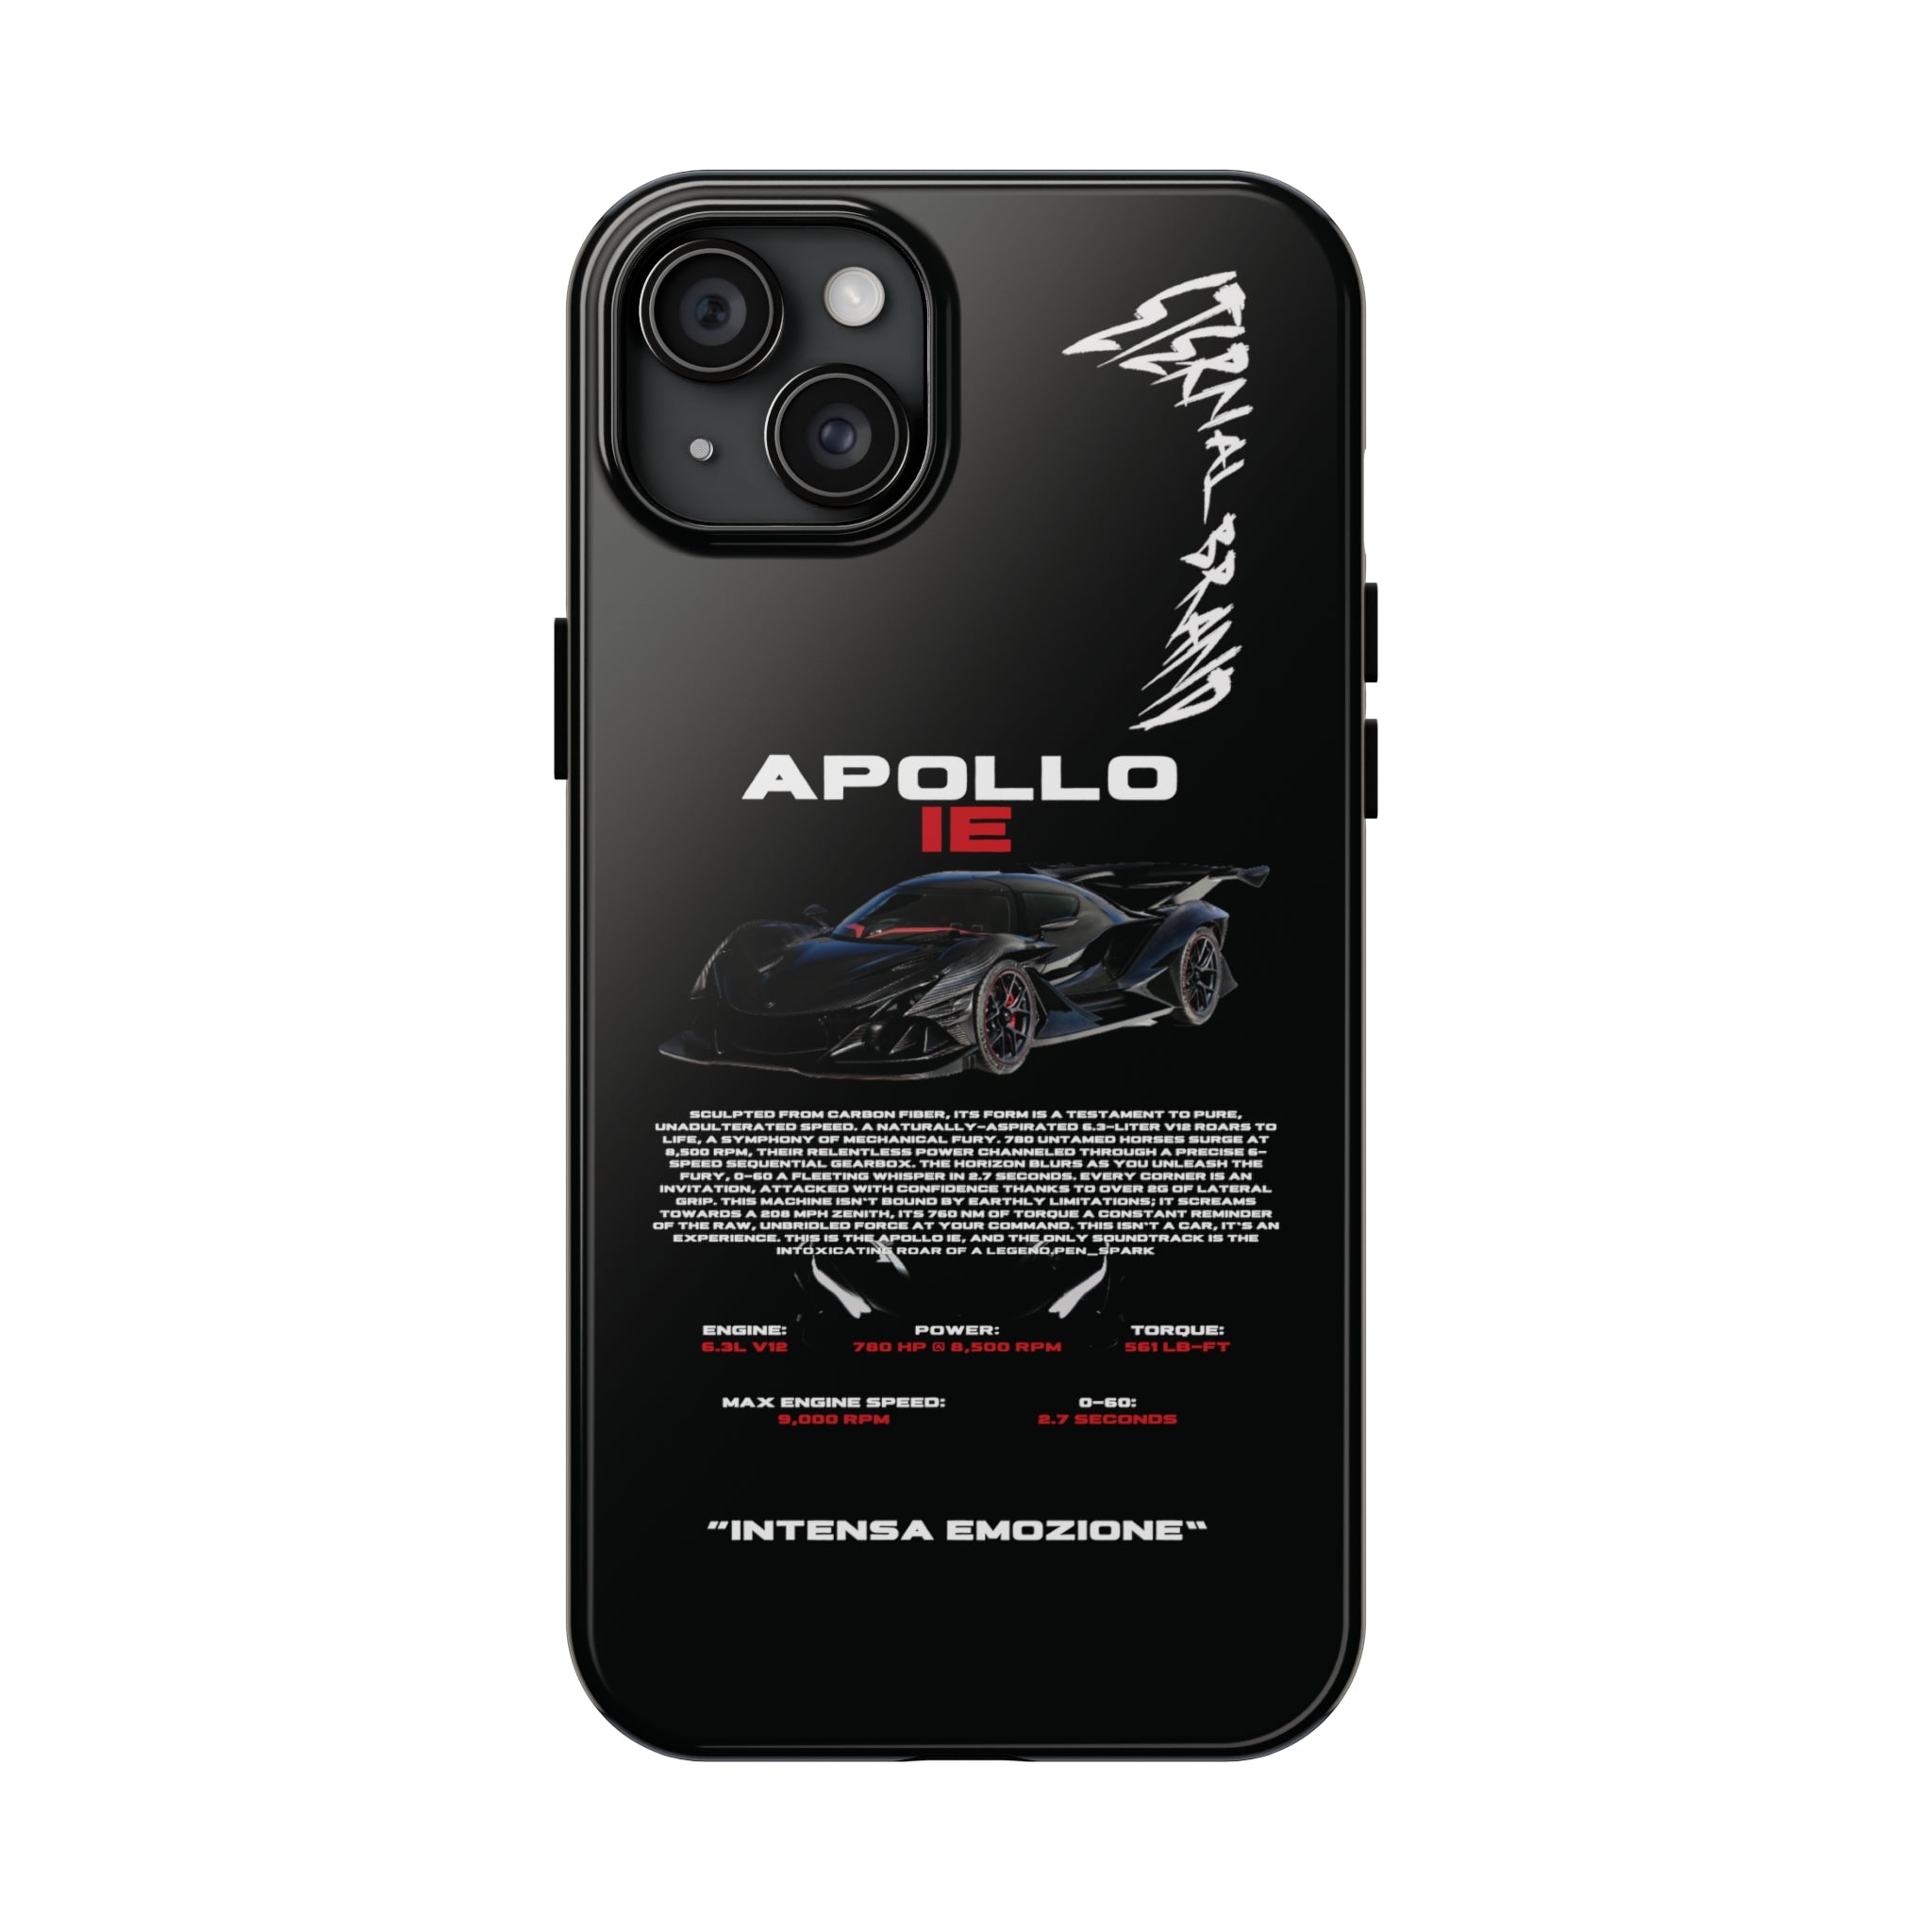 Apollo IE "Full Carbon" "Noir"